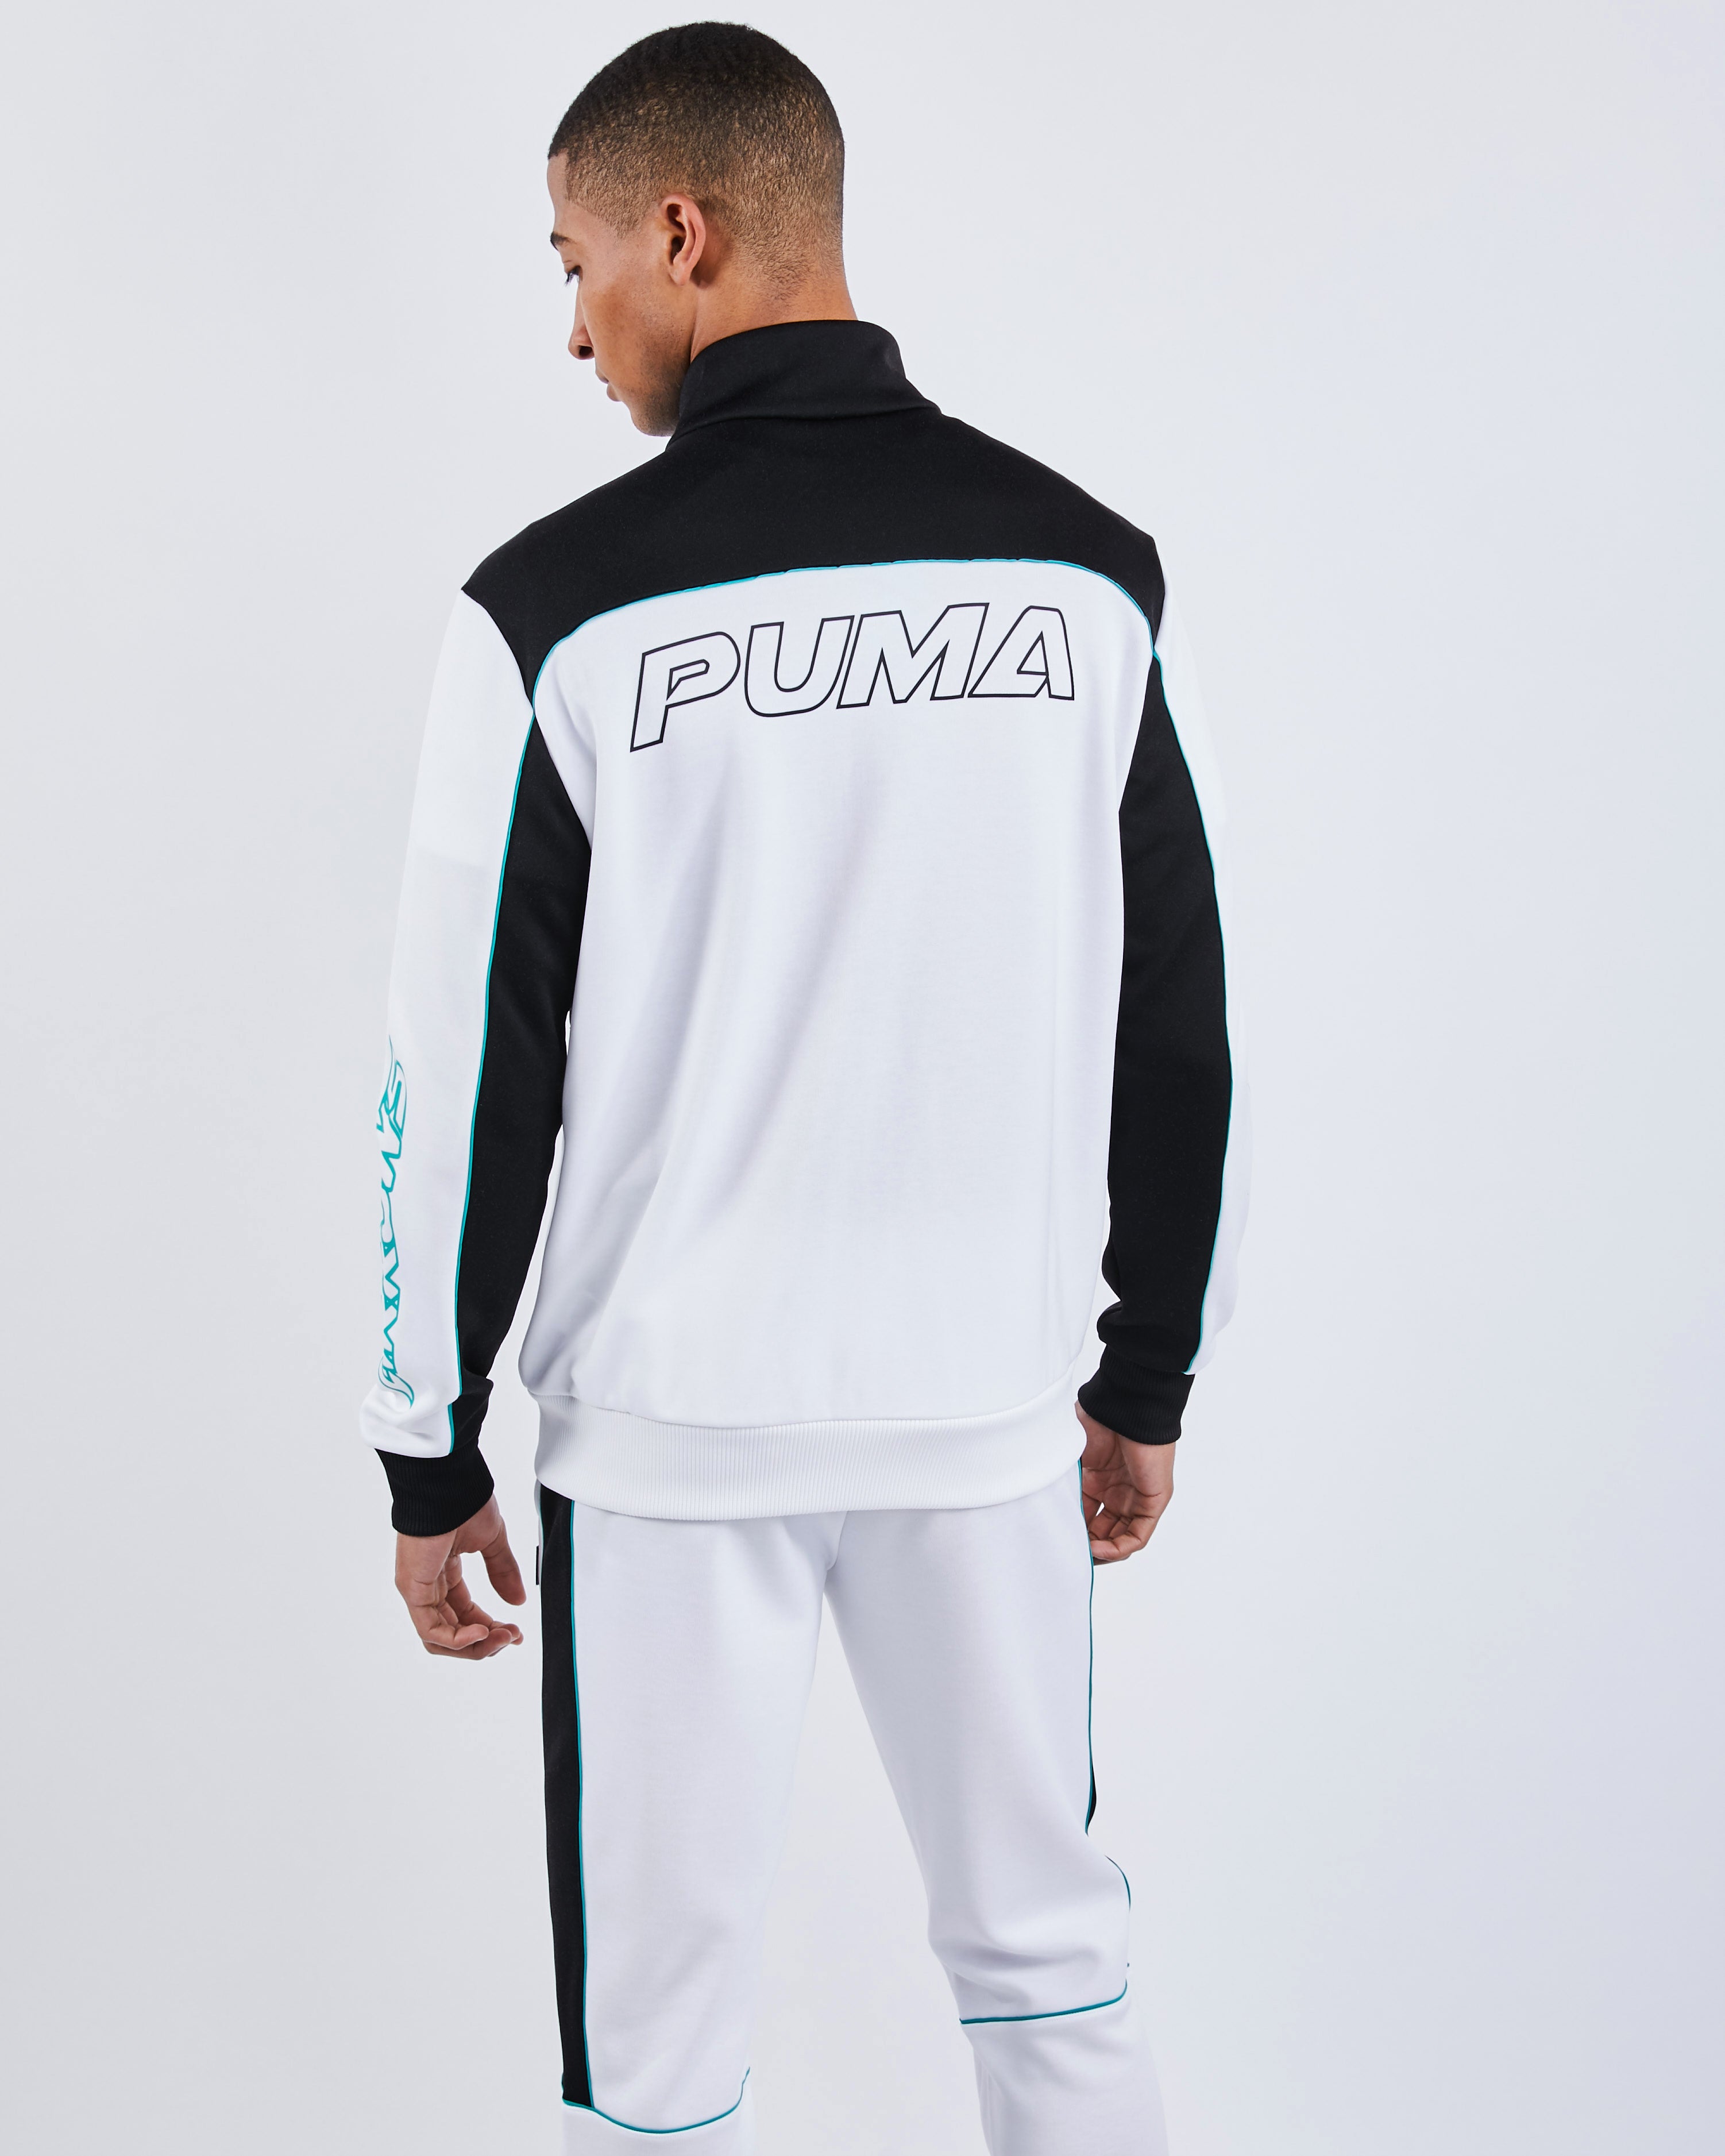 Puma X Mercedes @ Footlocker